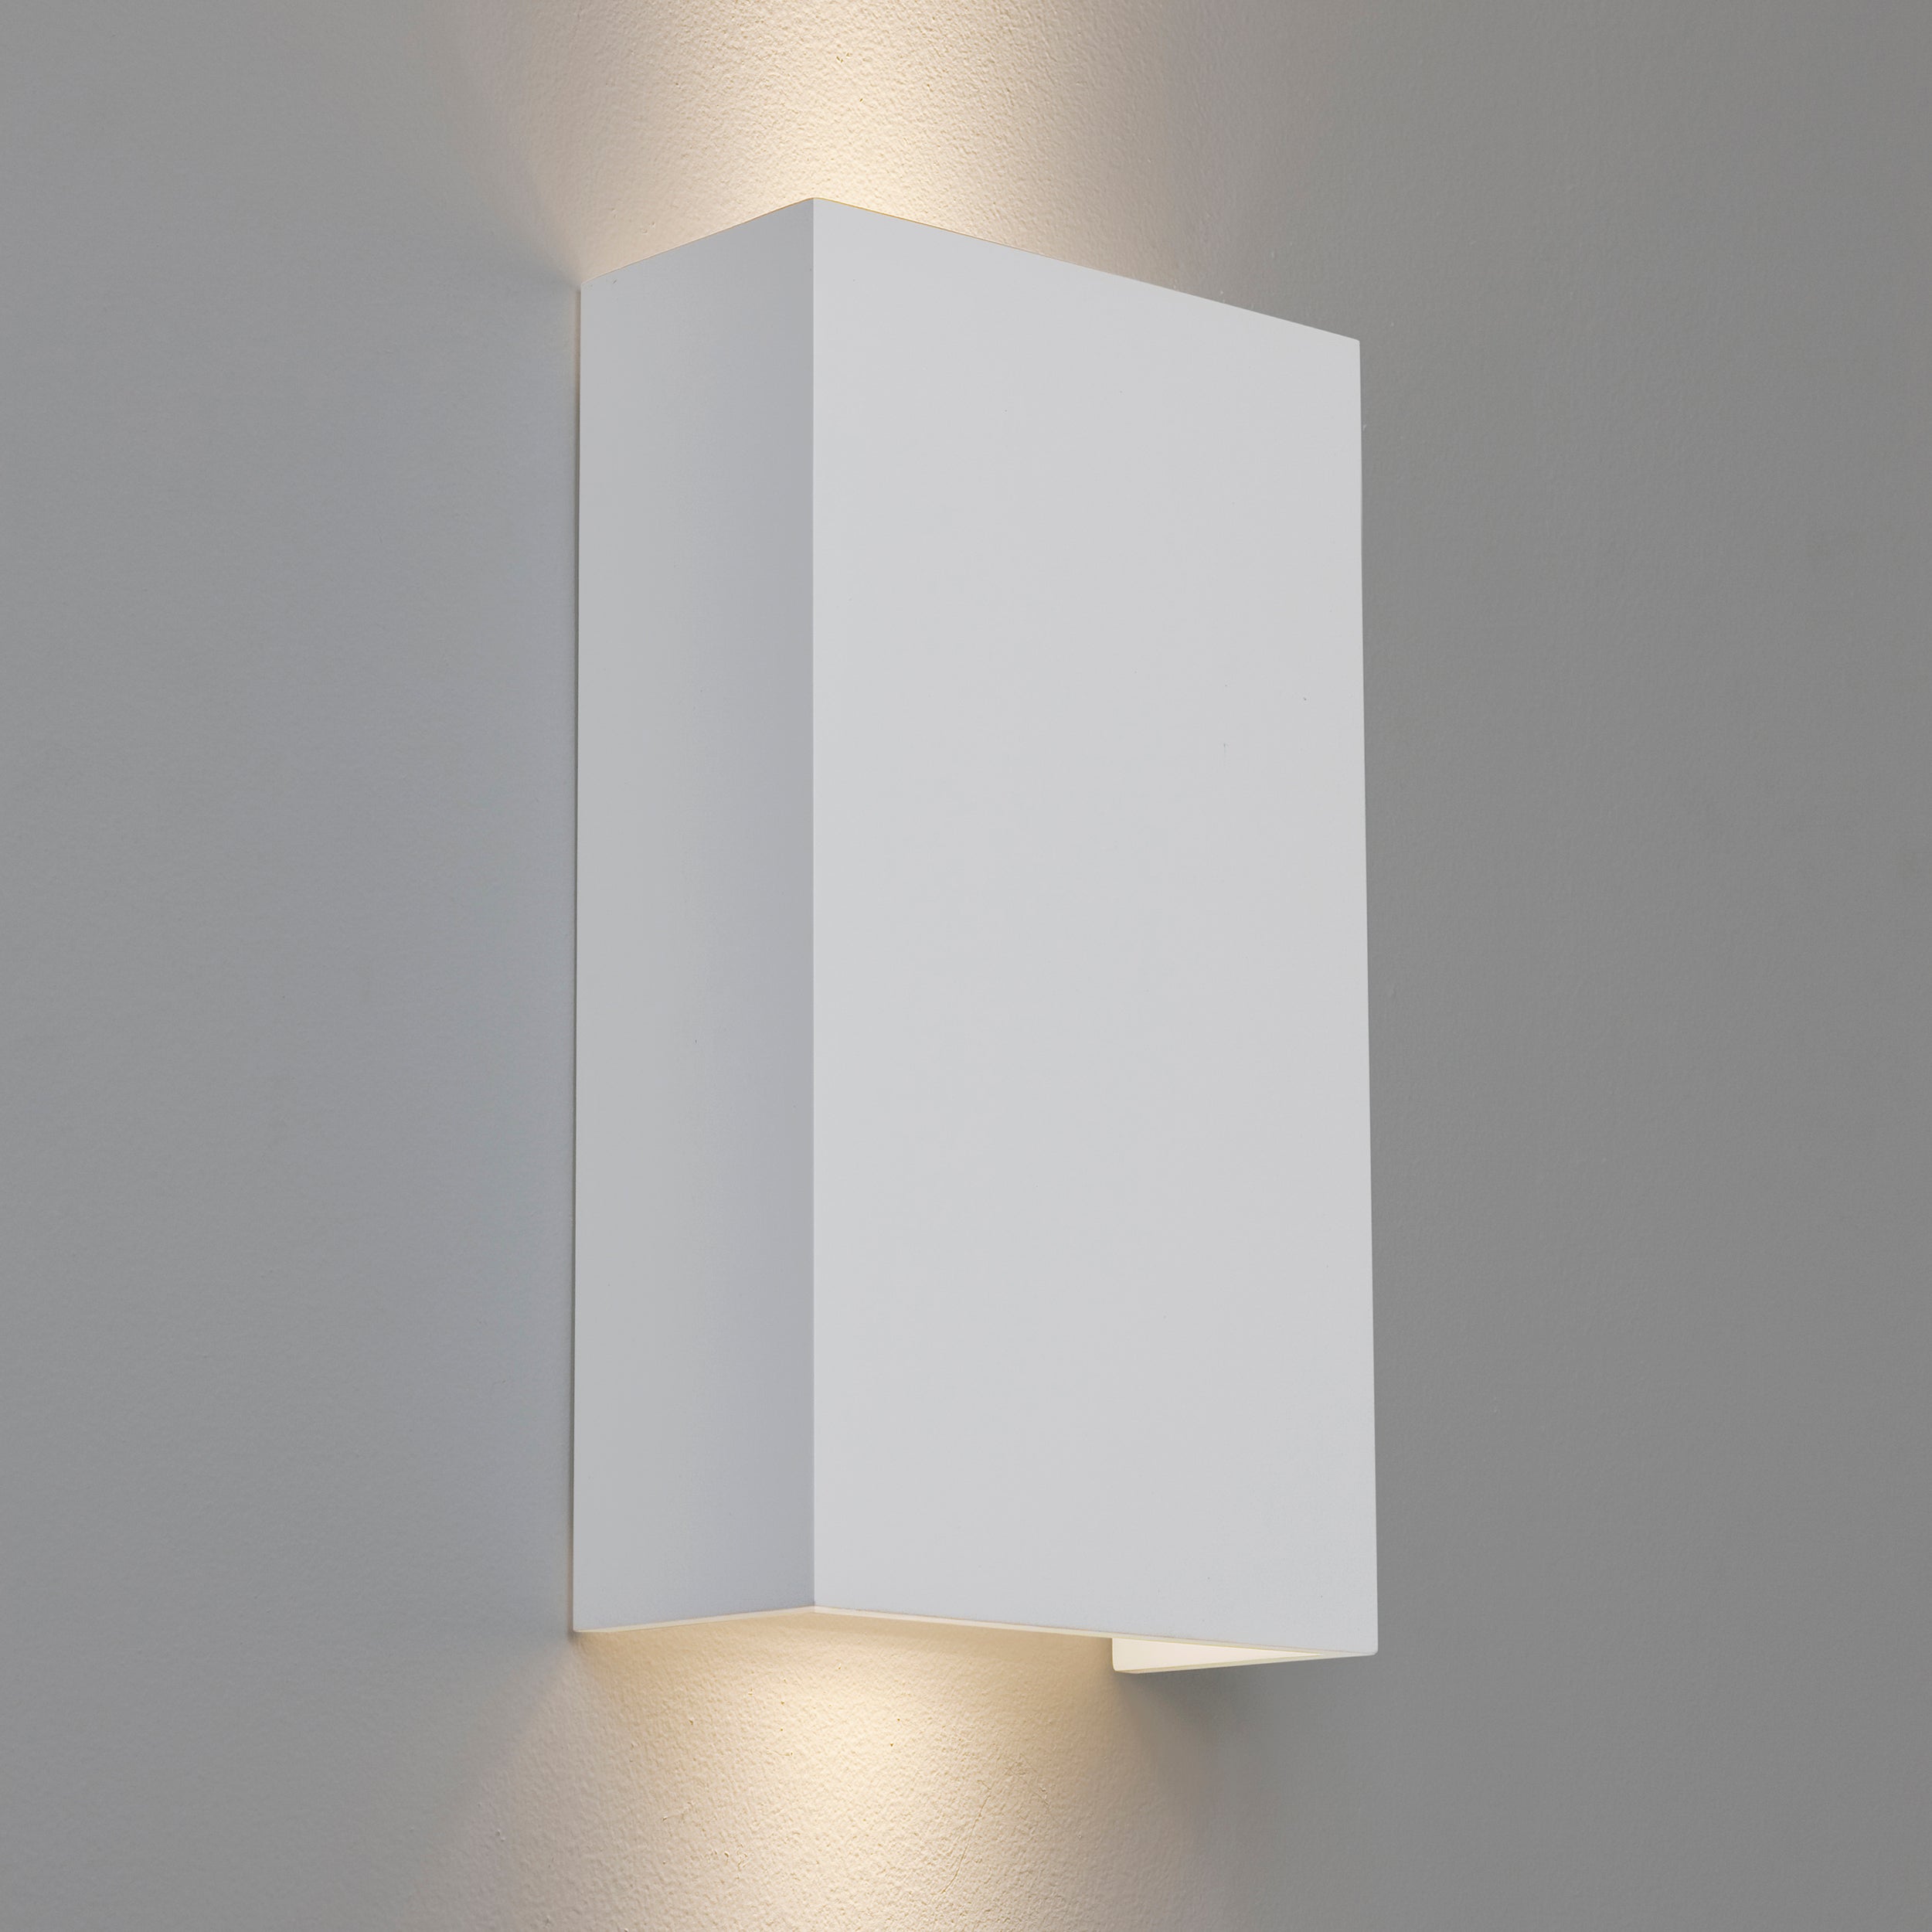 Astro Lighting Pella Wall Light Fixtures Astro Lighting 3.11x7.48x12.8 Plaster No, LED GU10